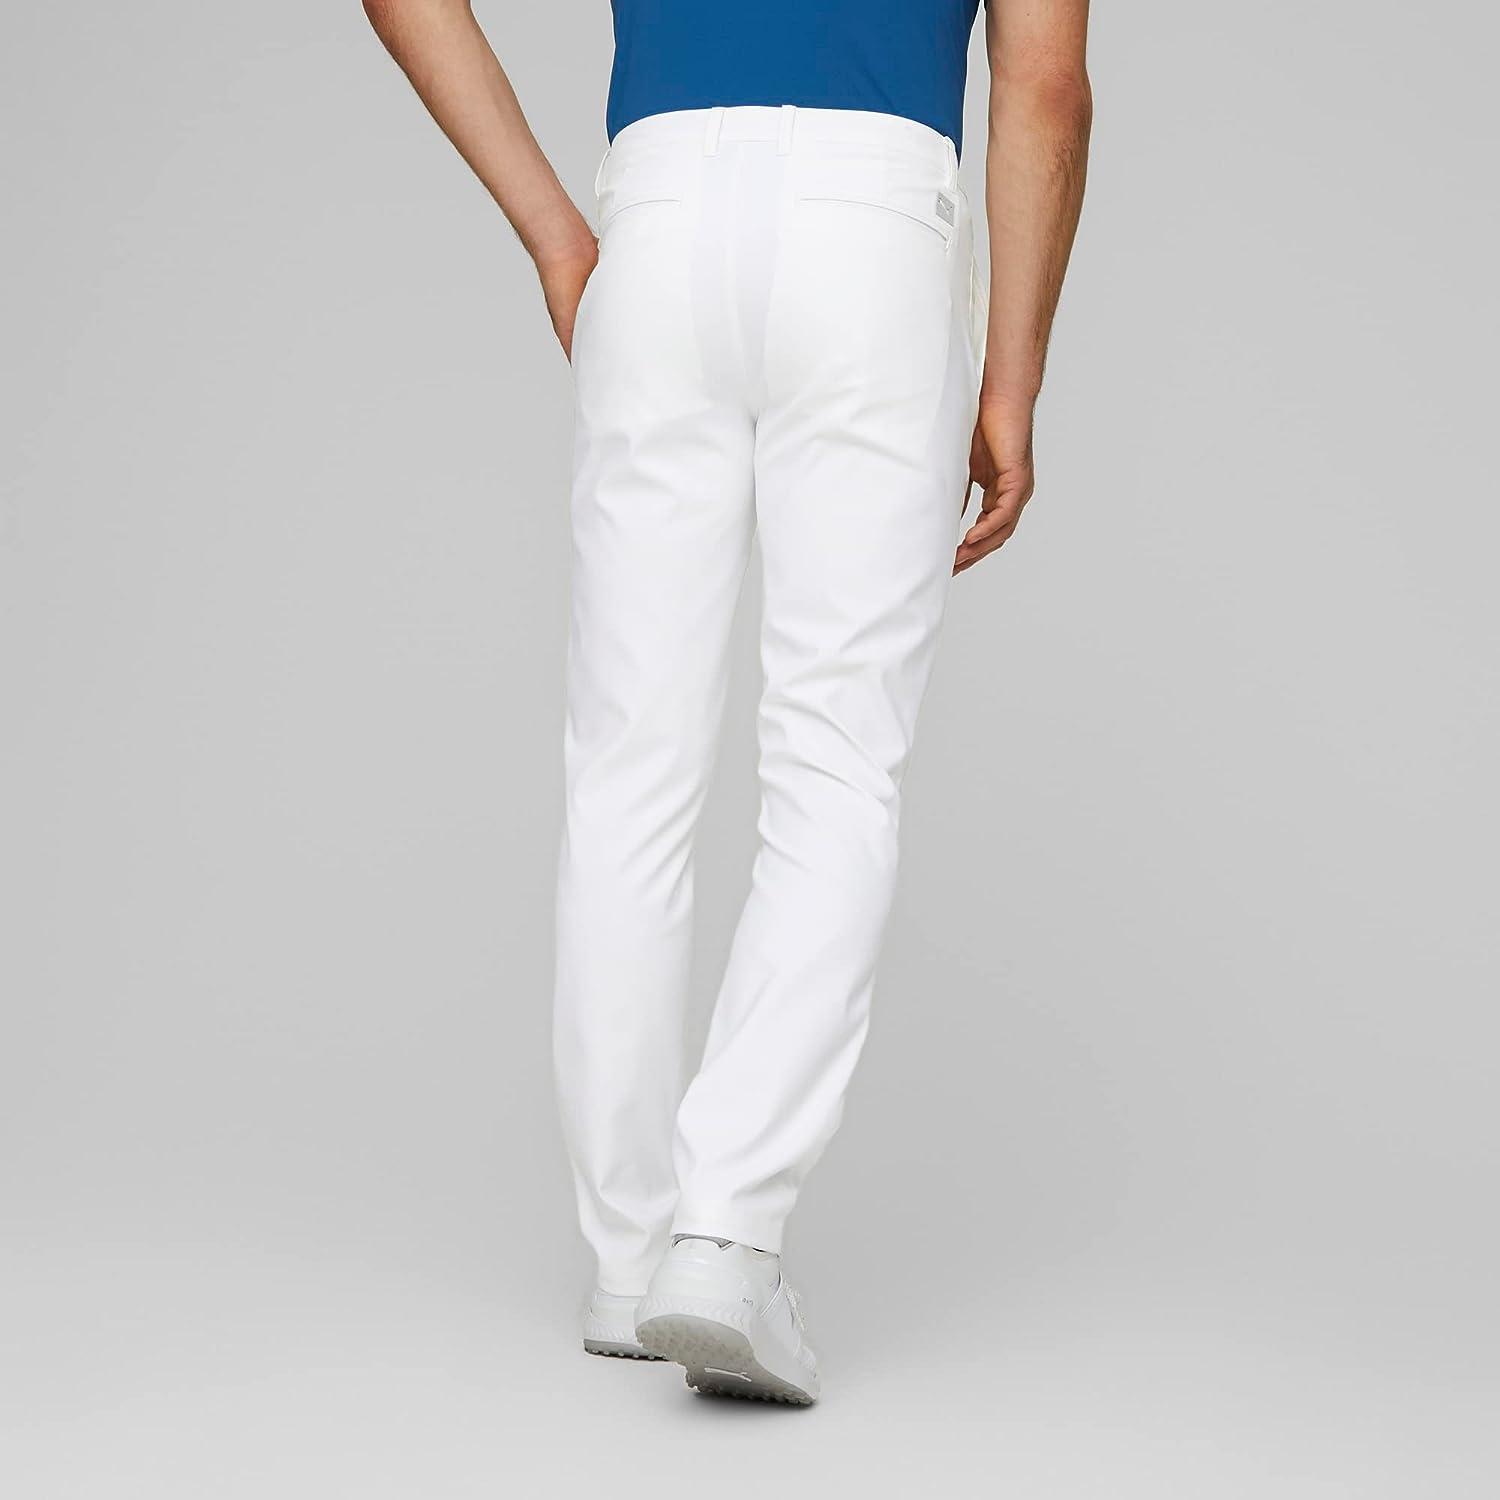 PUMA GOLF Men's Dealer Tailored Pant White Glow 30W x 30L